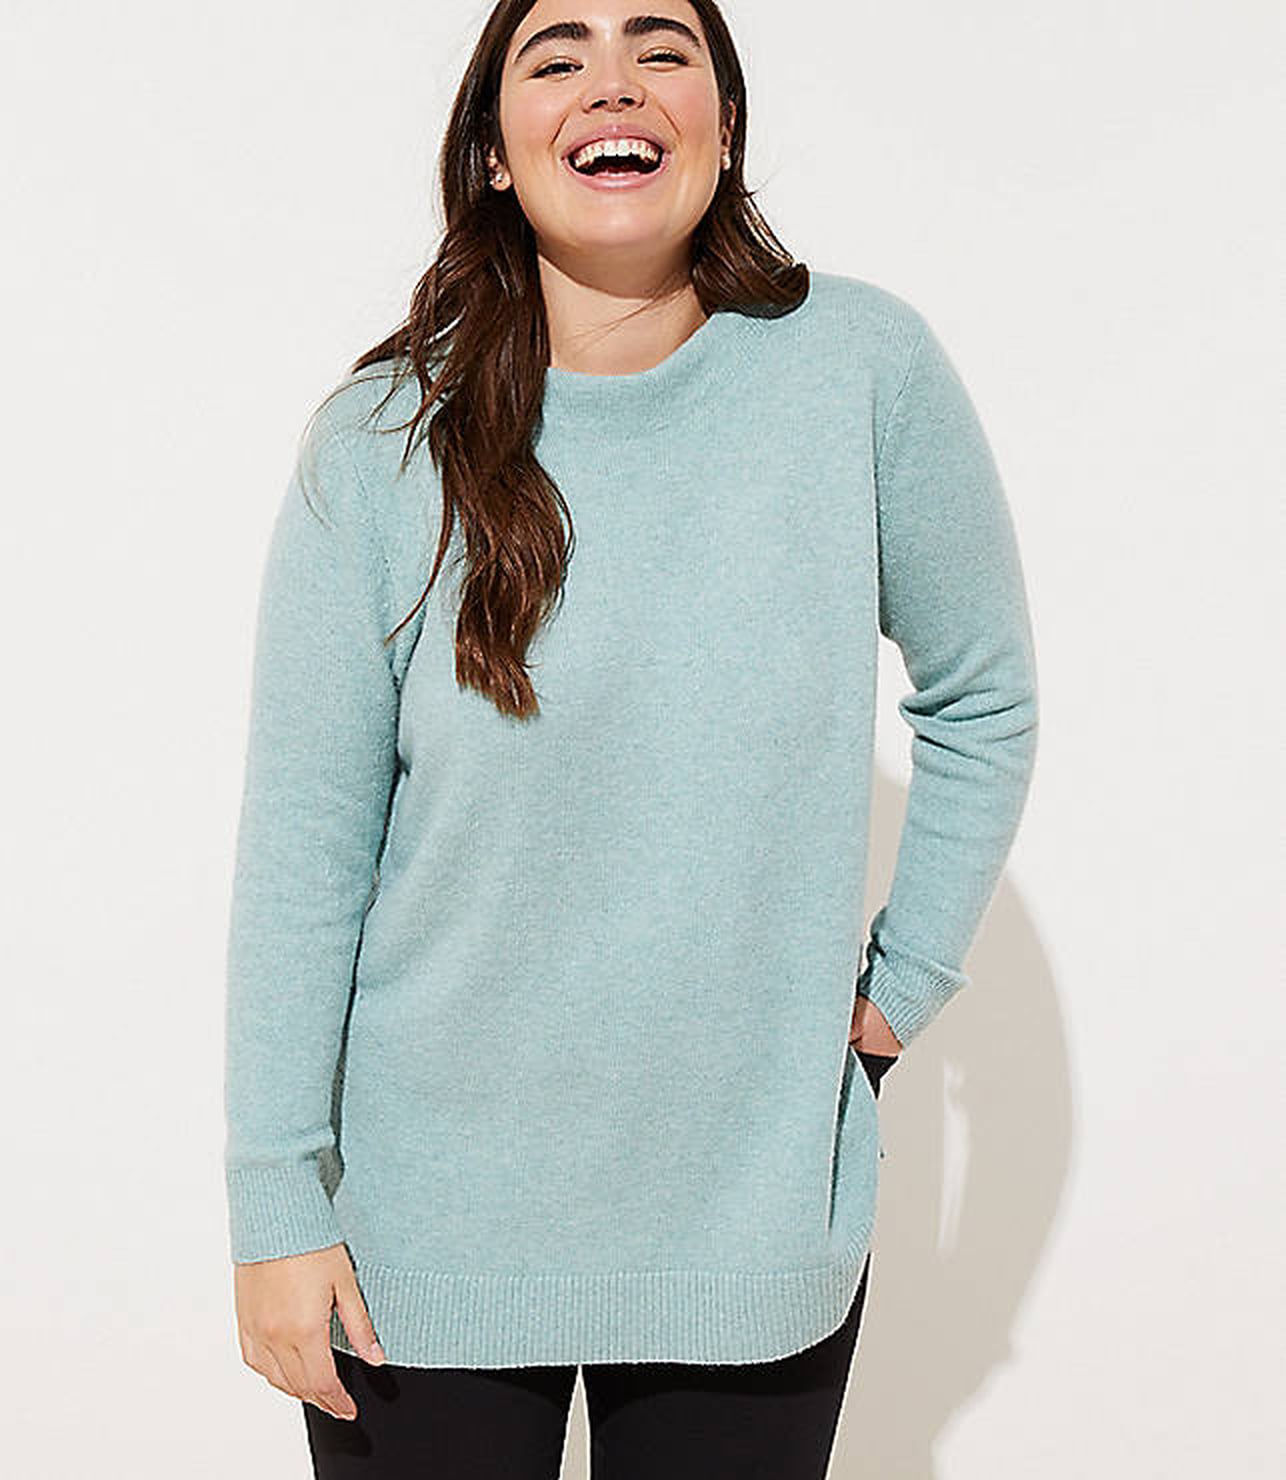 Comfortable Sweaters For Women | POPSUGAR Fashion